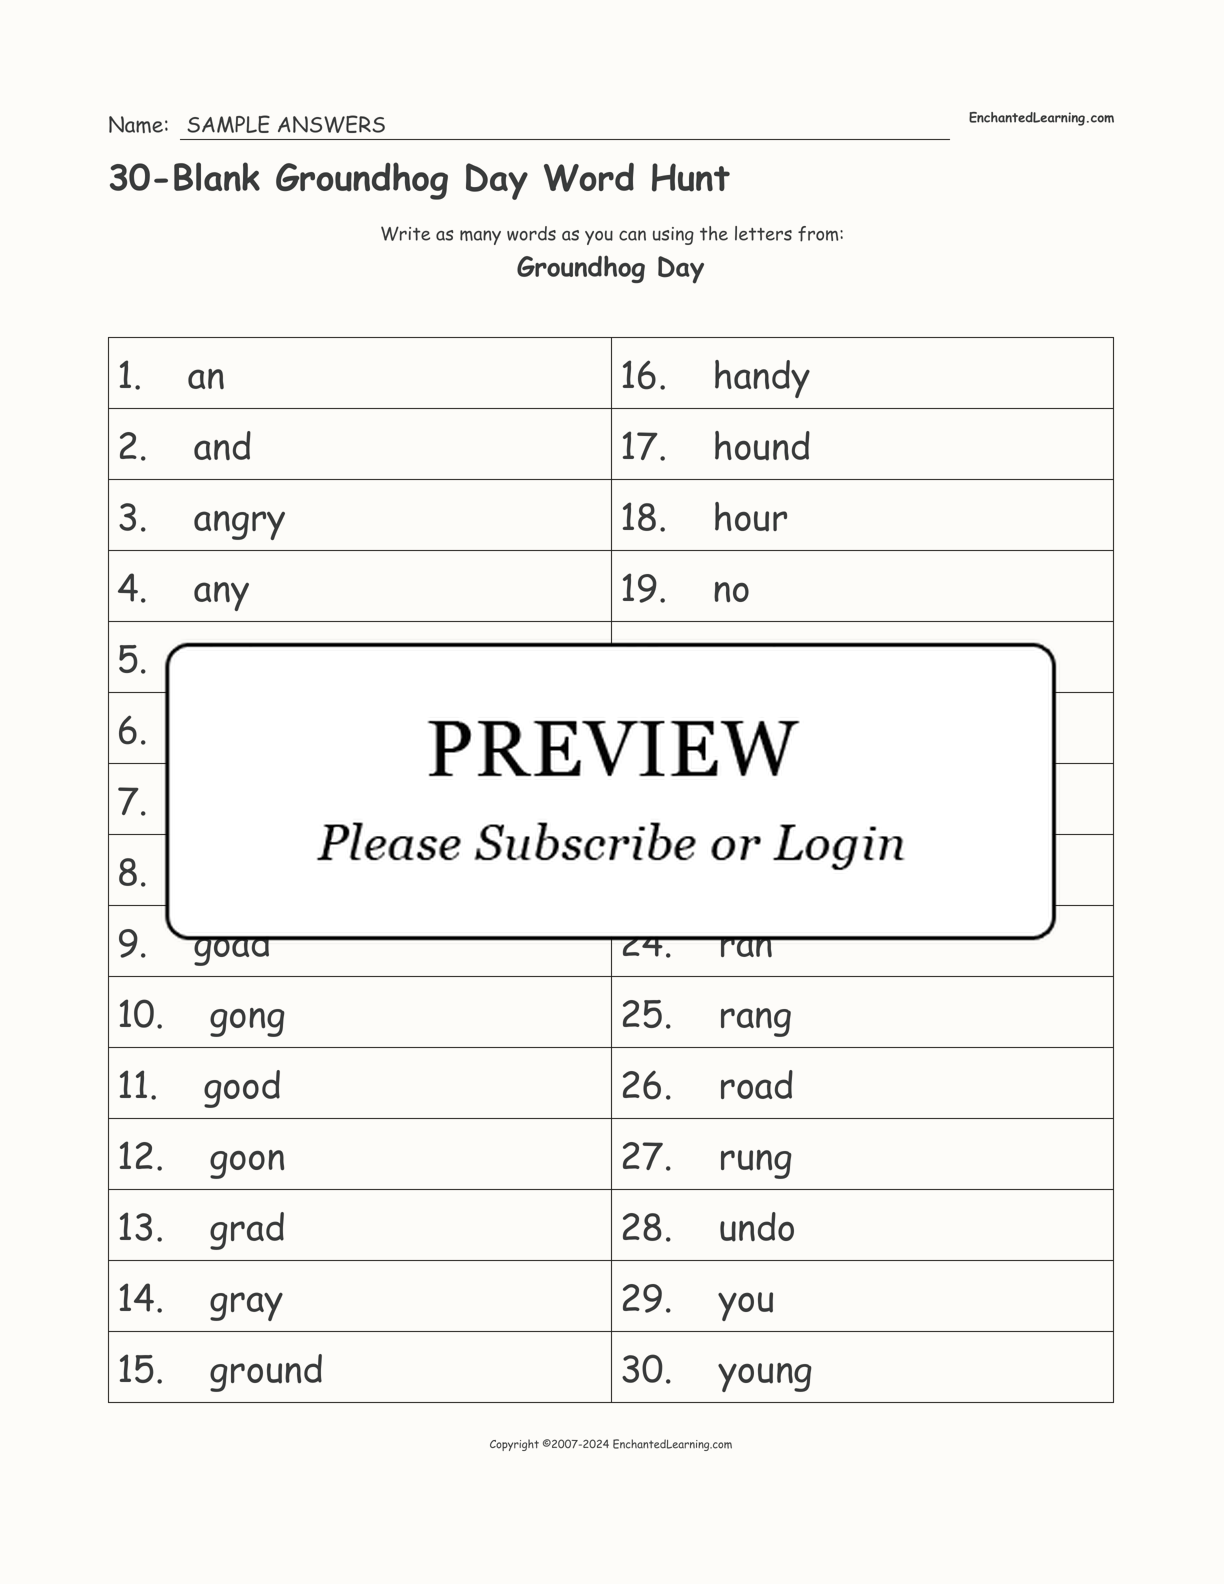 30-Blank Groundhog Day Word Hunt interactive worksheet page 2